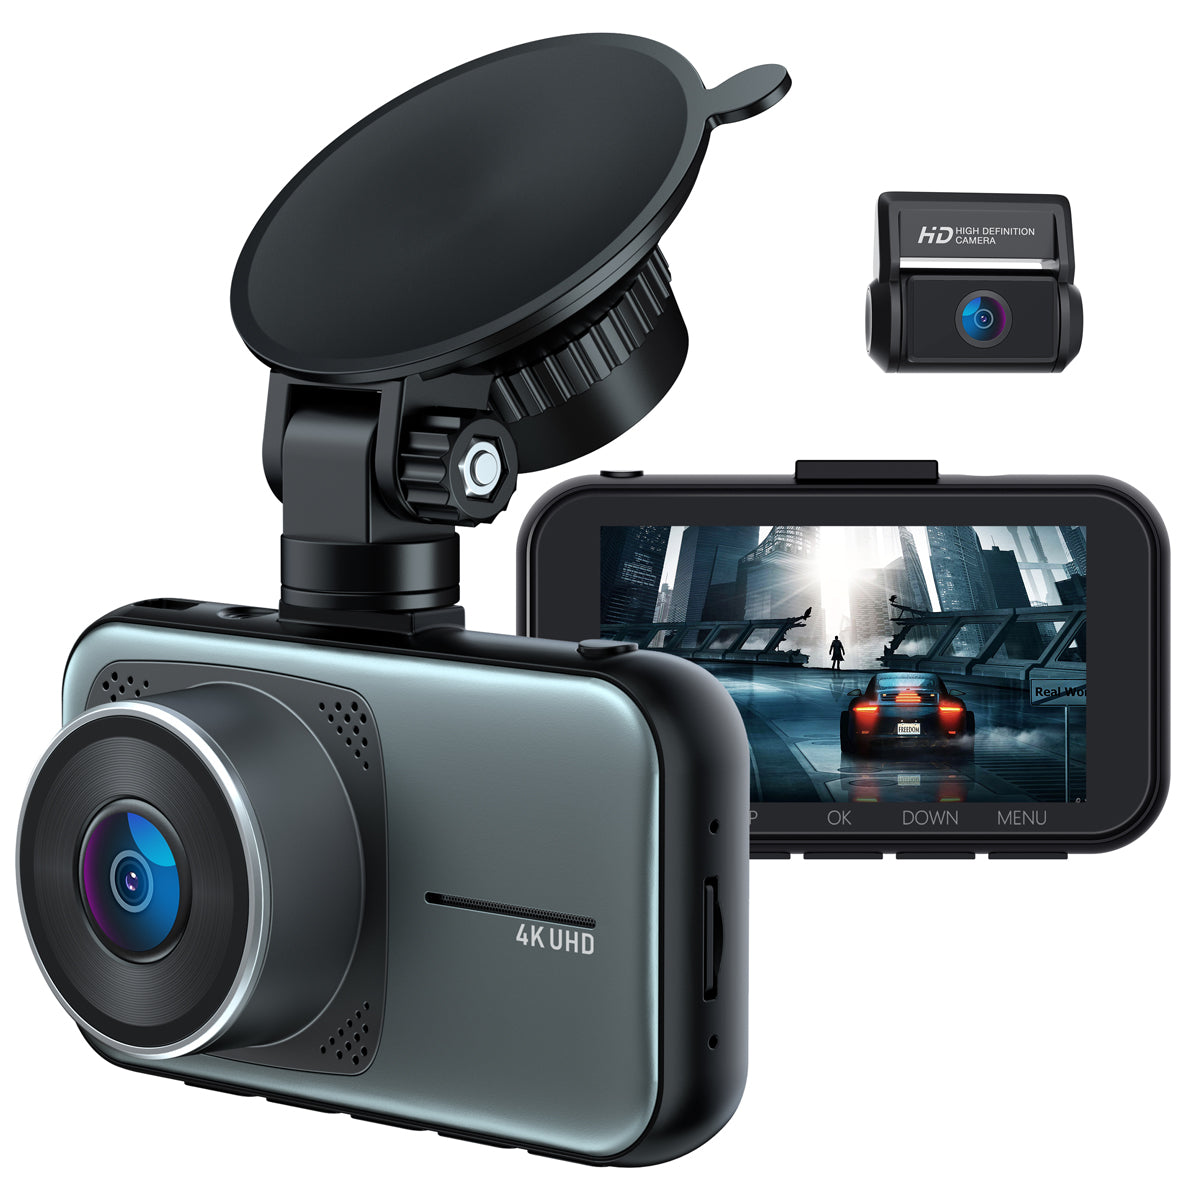 Buy Dash Cam Online, Toguard C200 Dash Cam